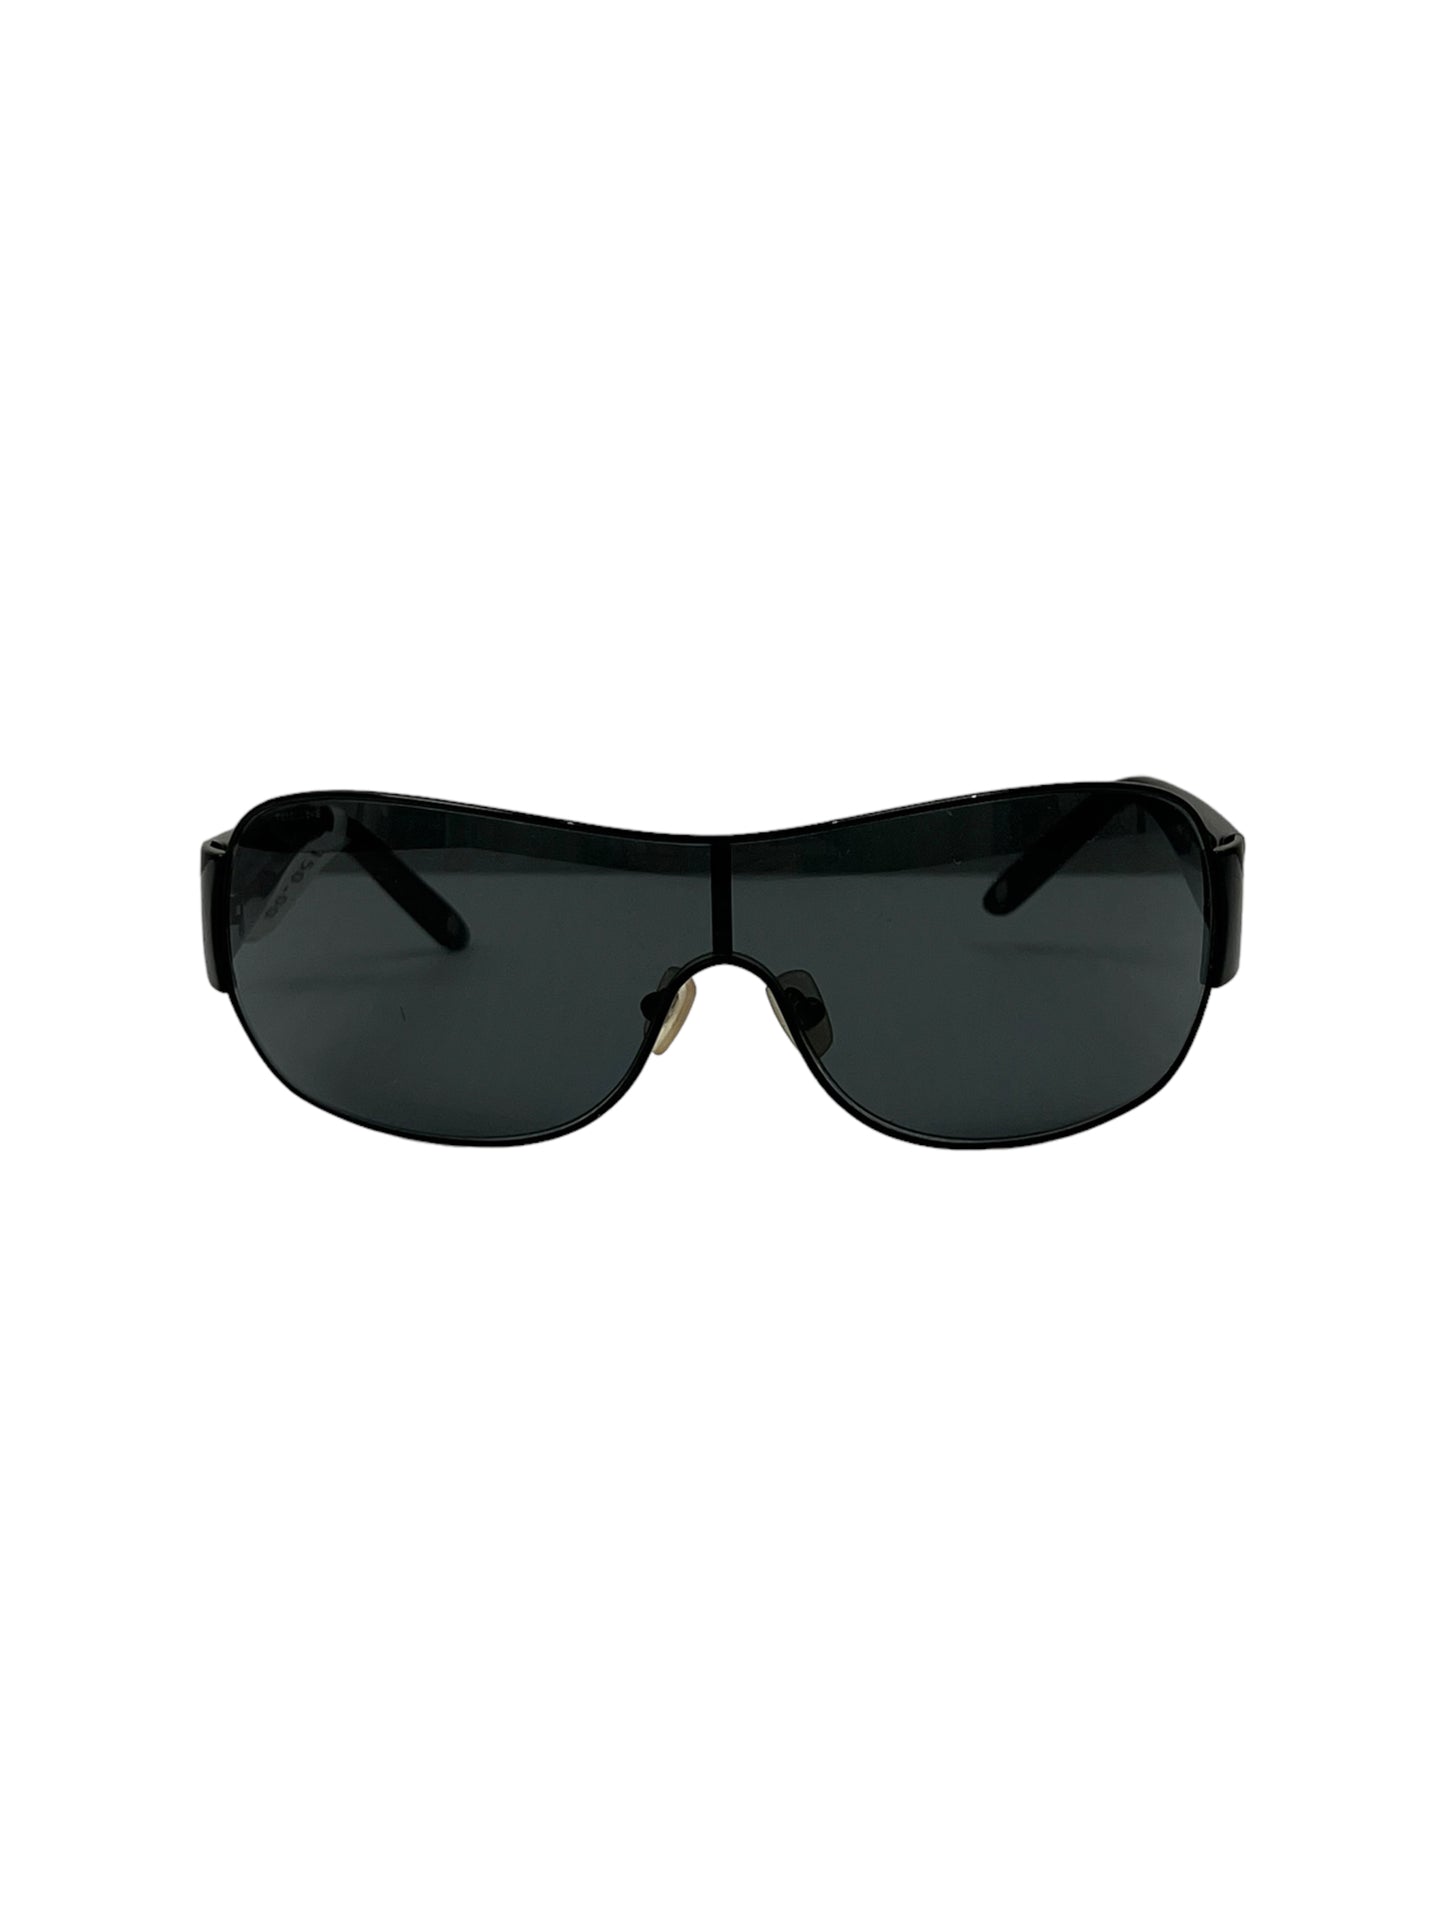 Versace Black Frame & Black Shield Lens Sunglasses